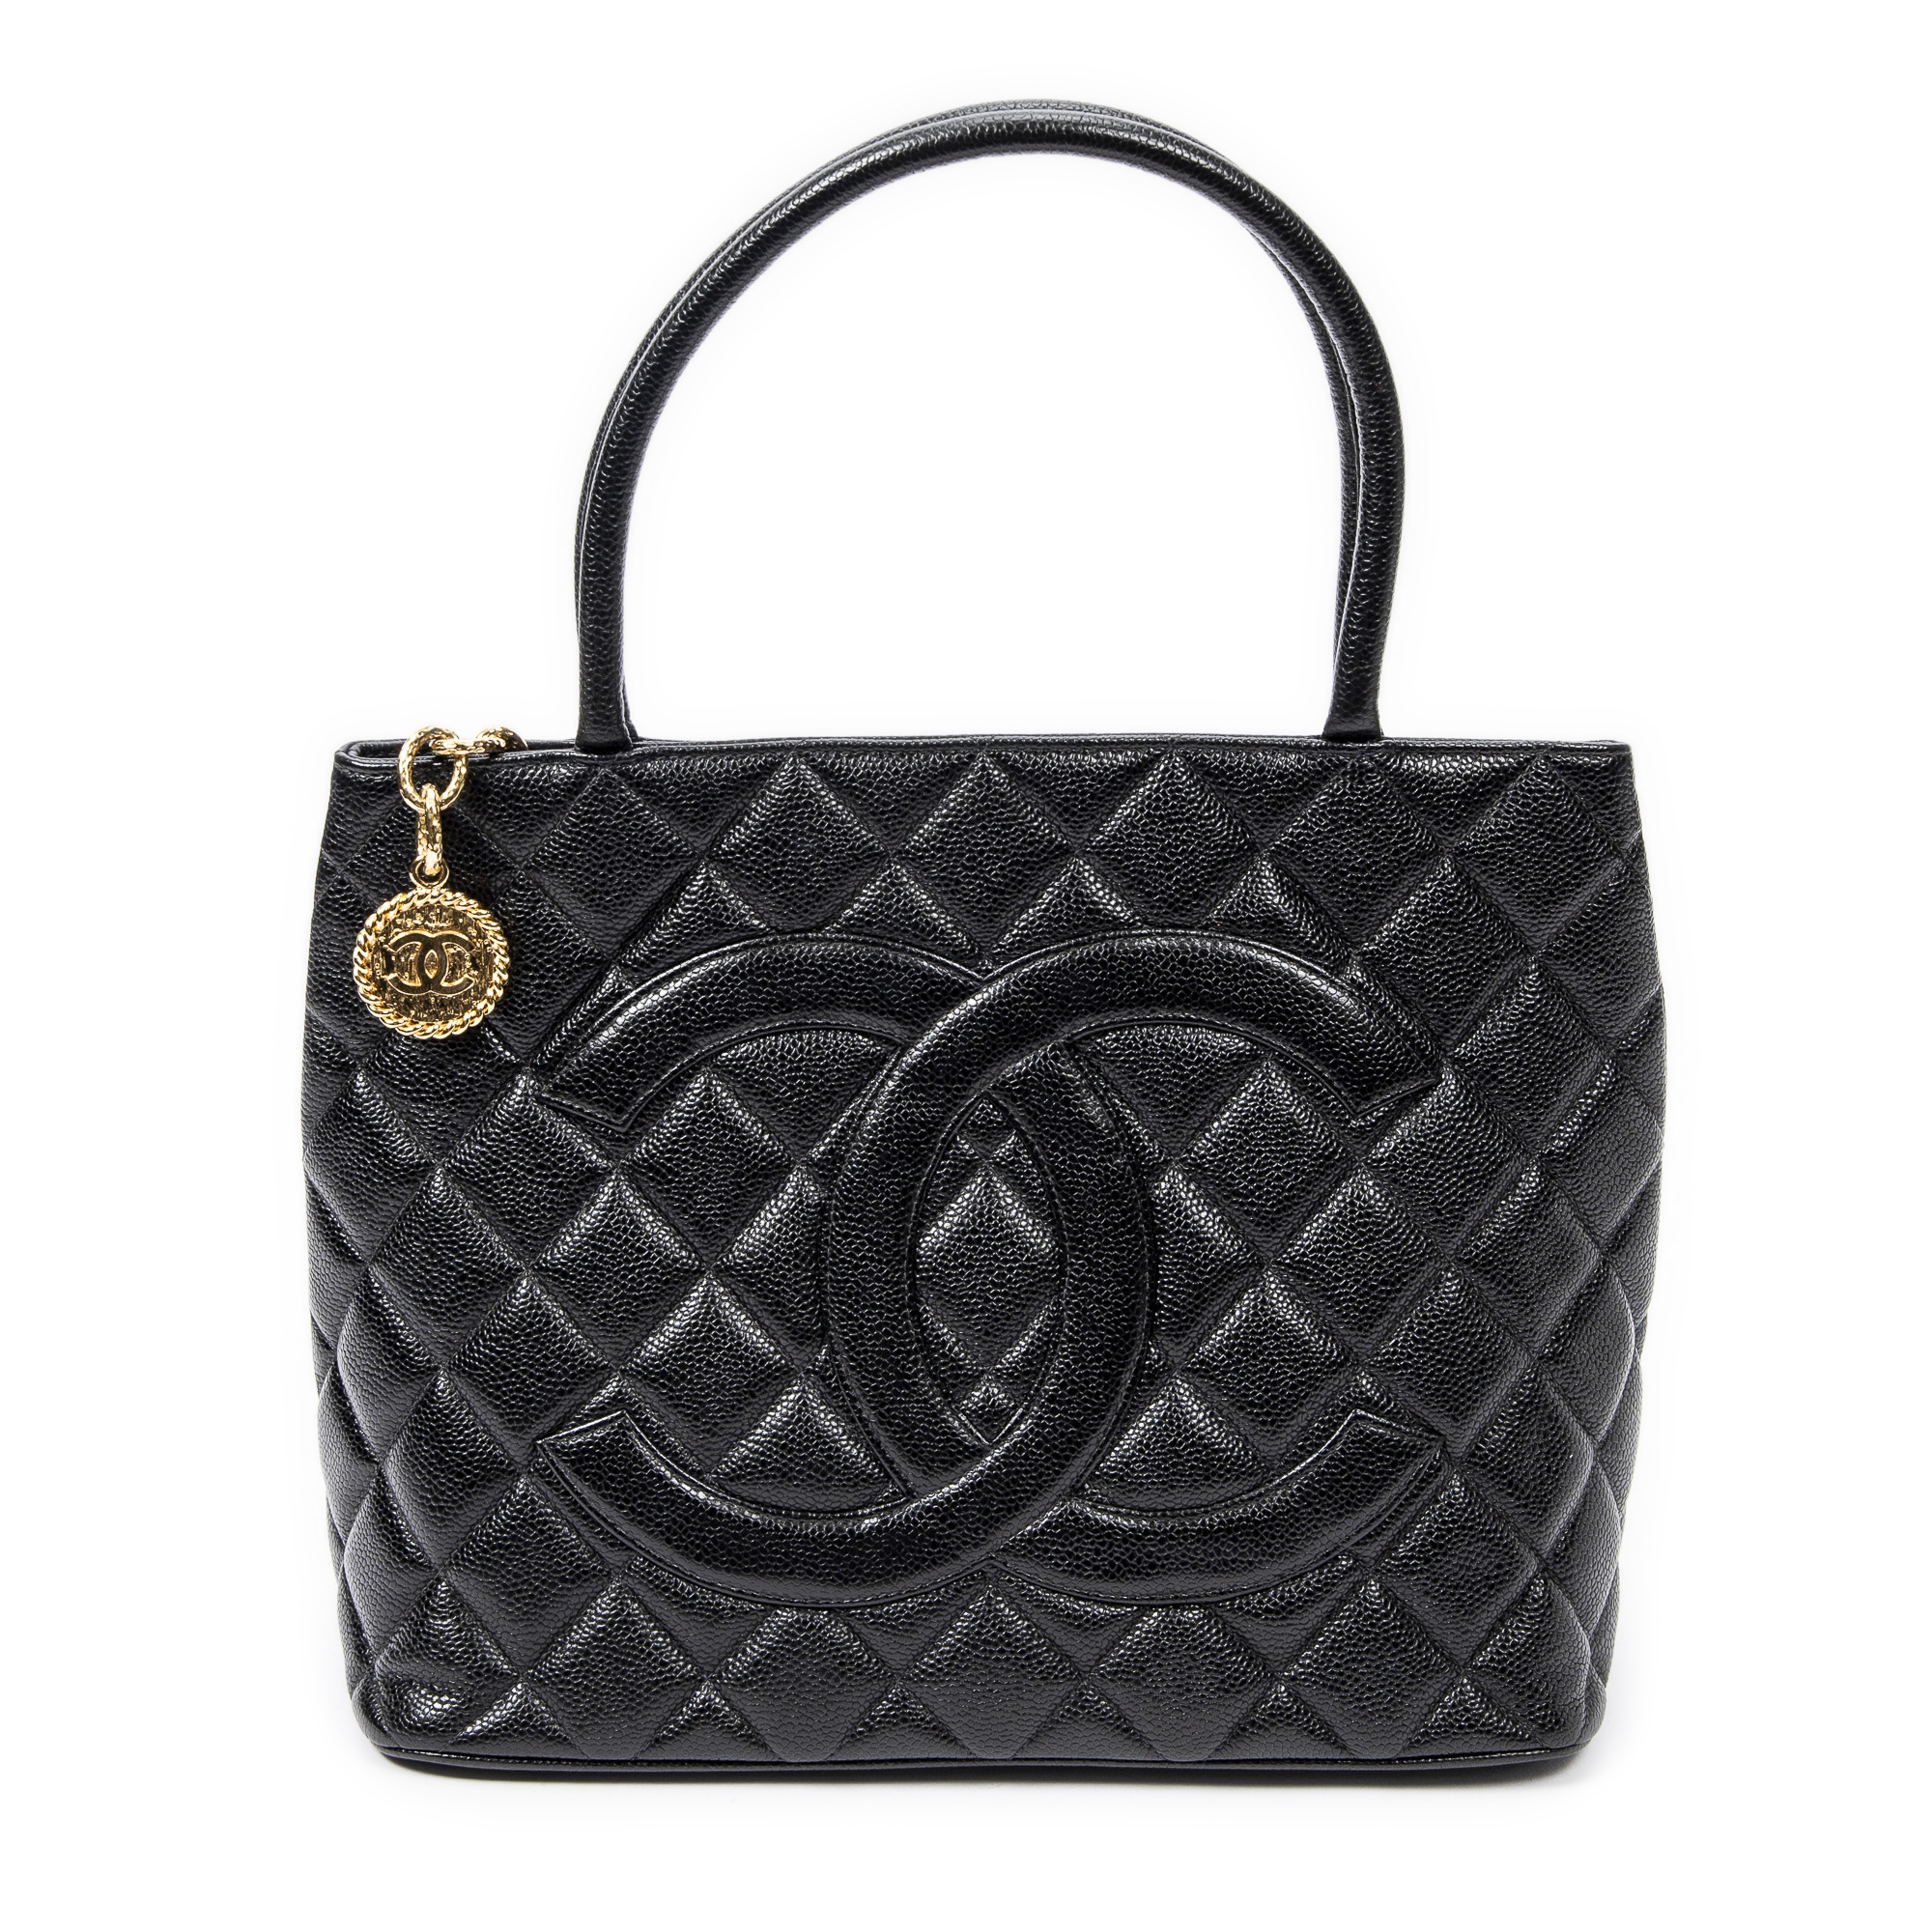 Chanel Caviar Medallion Tote - Totes, Handbags